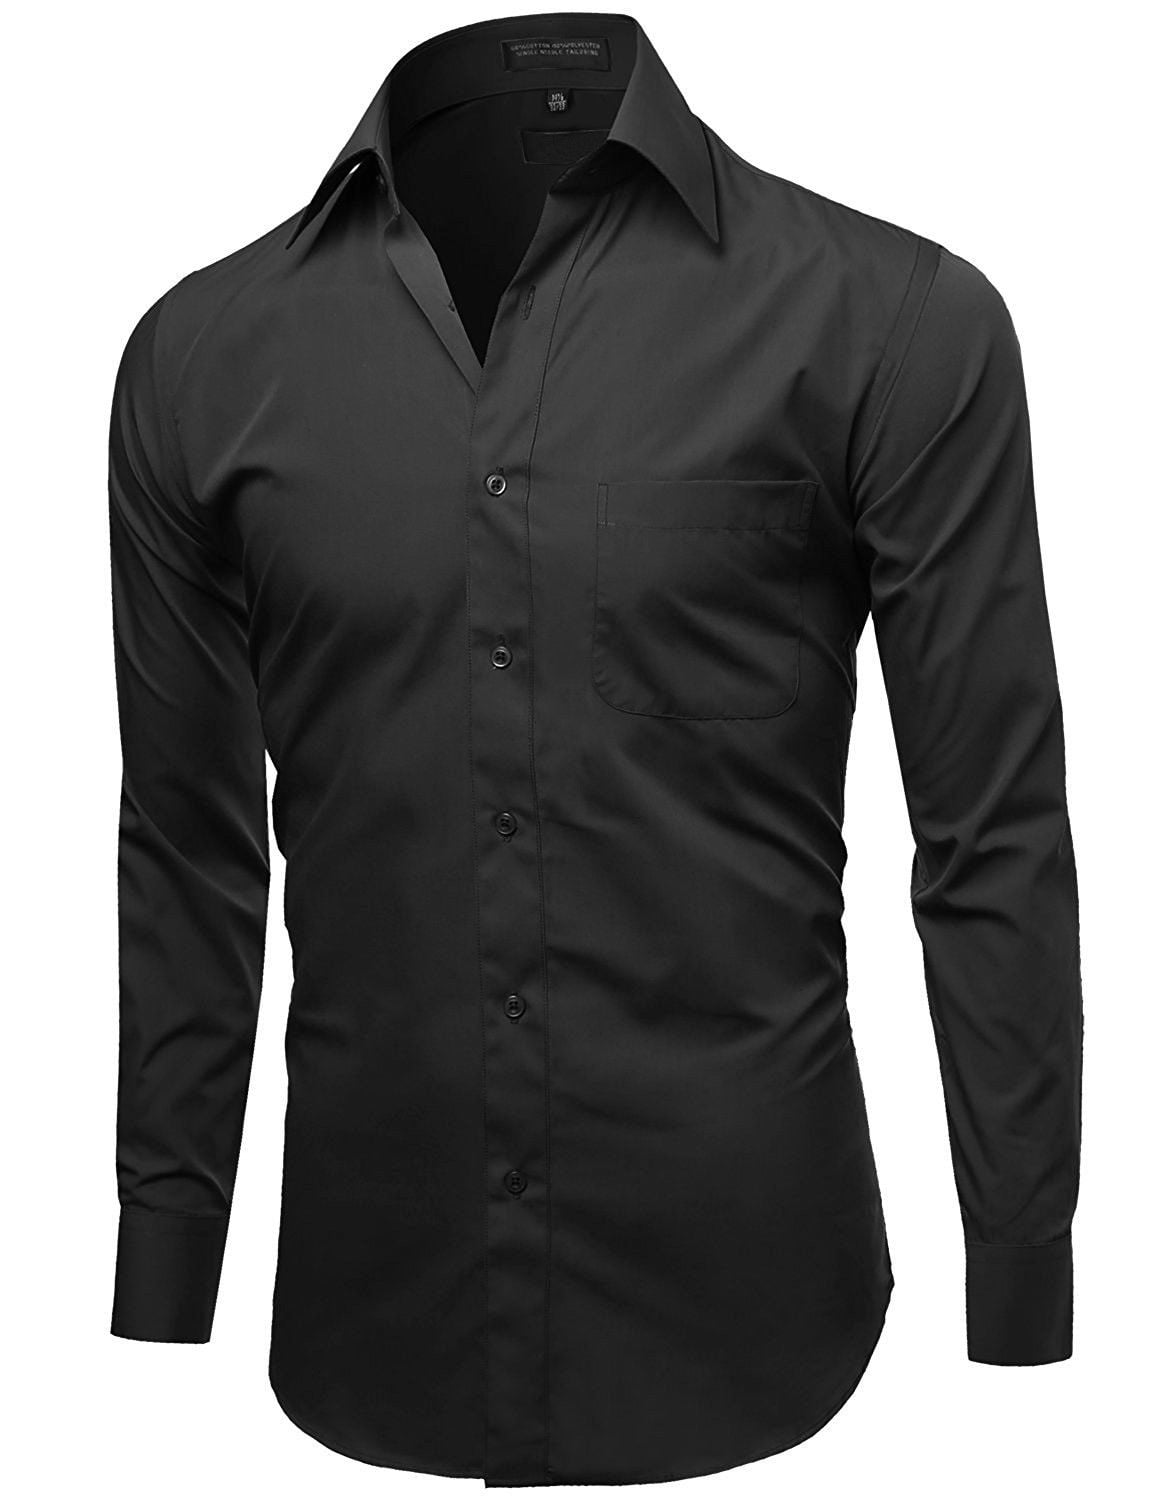 mens dress shirt black